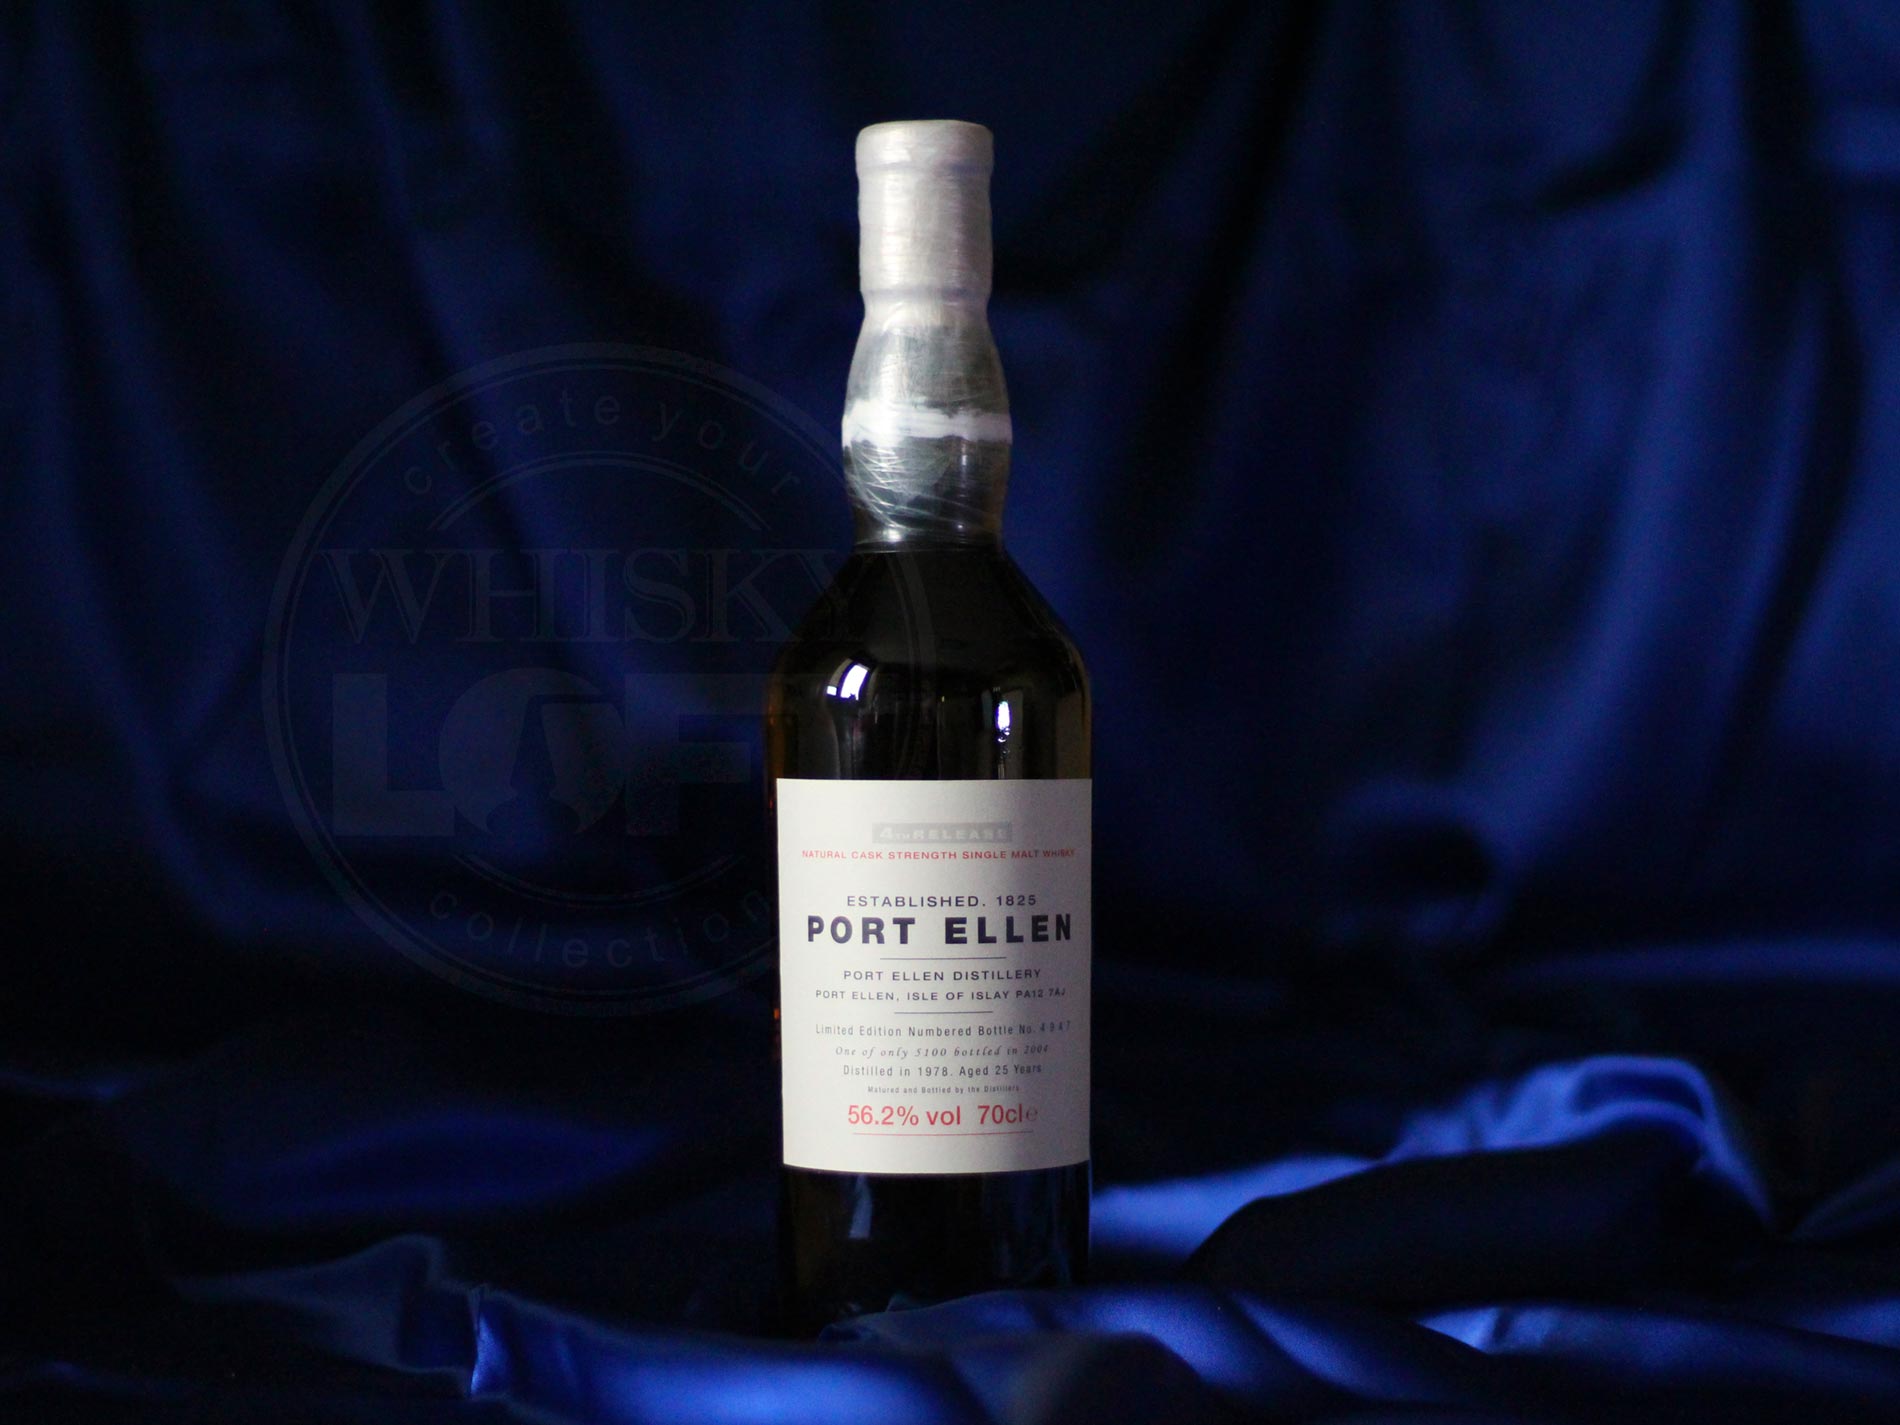 Single Malt Scotch Whisky, 1978 distilled, 25 years old.